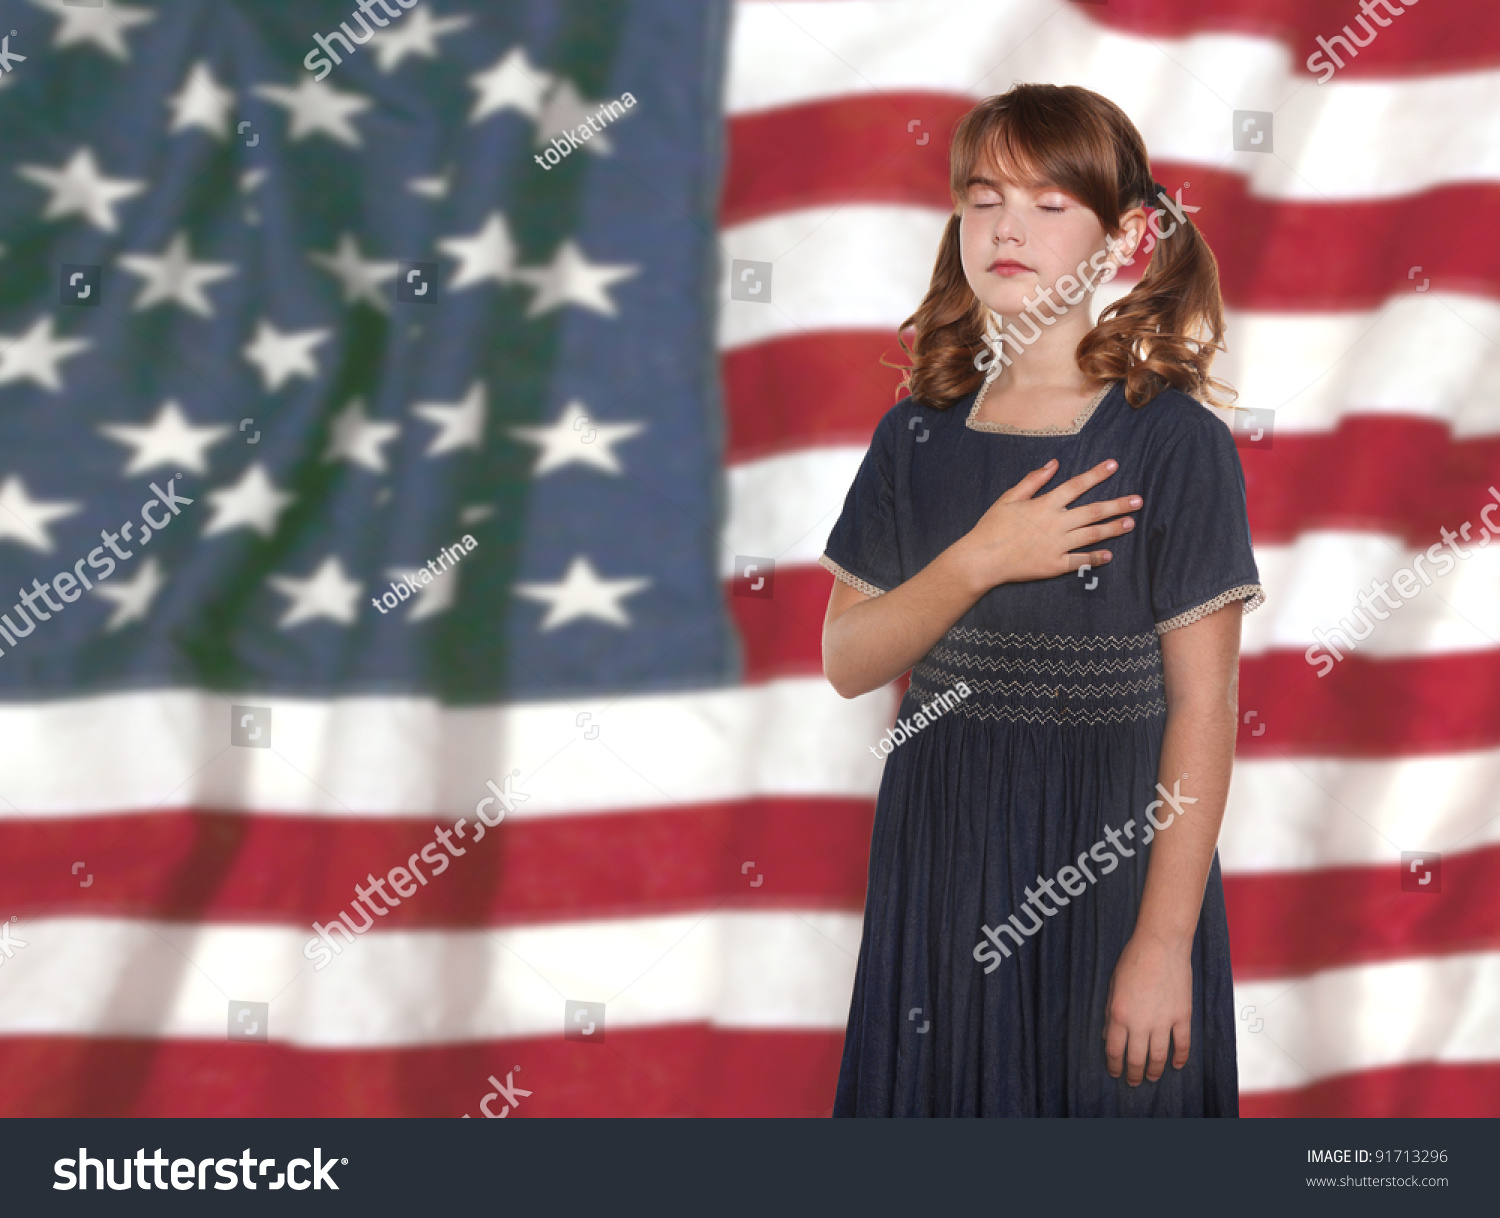 Patriotic Child Saying Pledge of Allegiance to the Flag #91713296